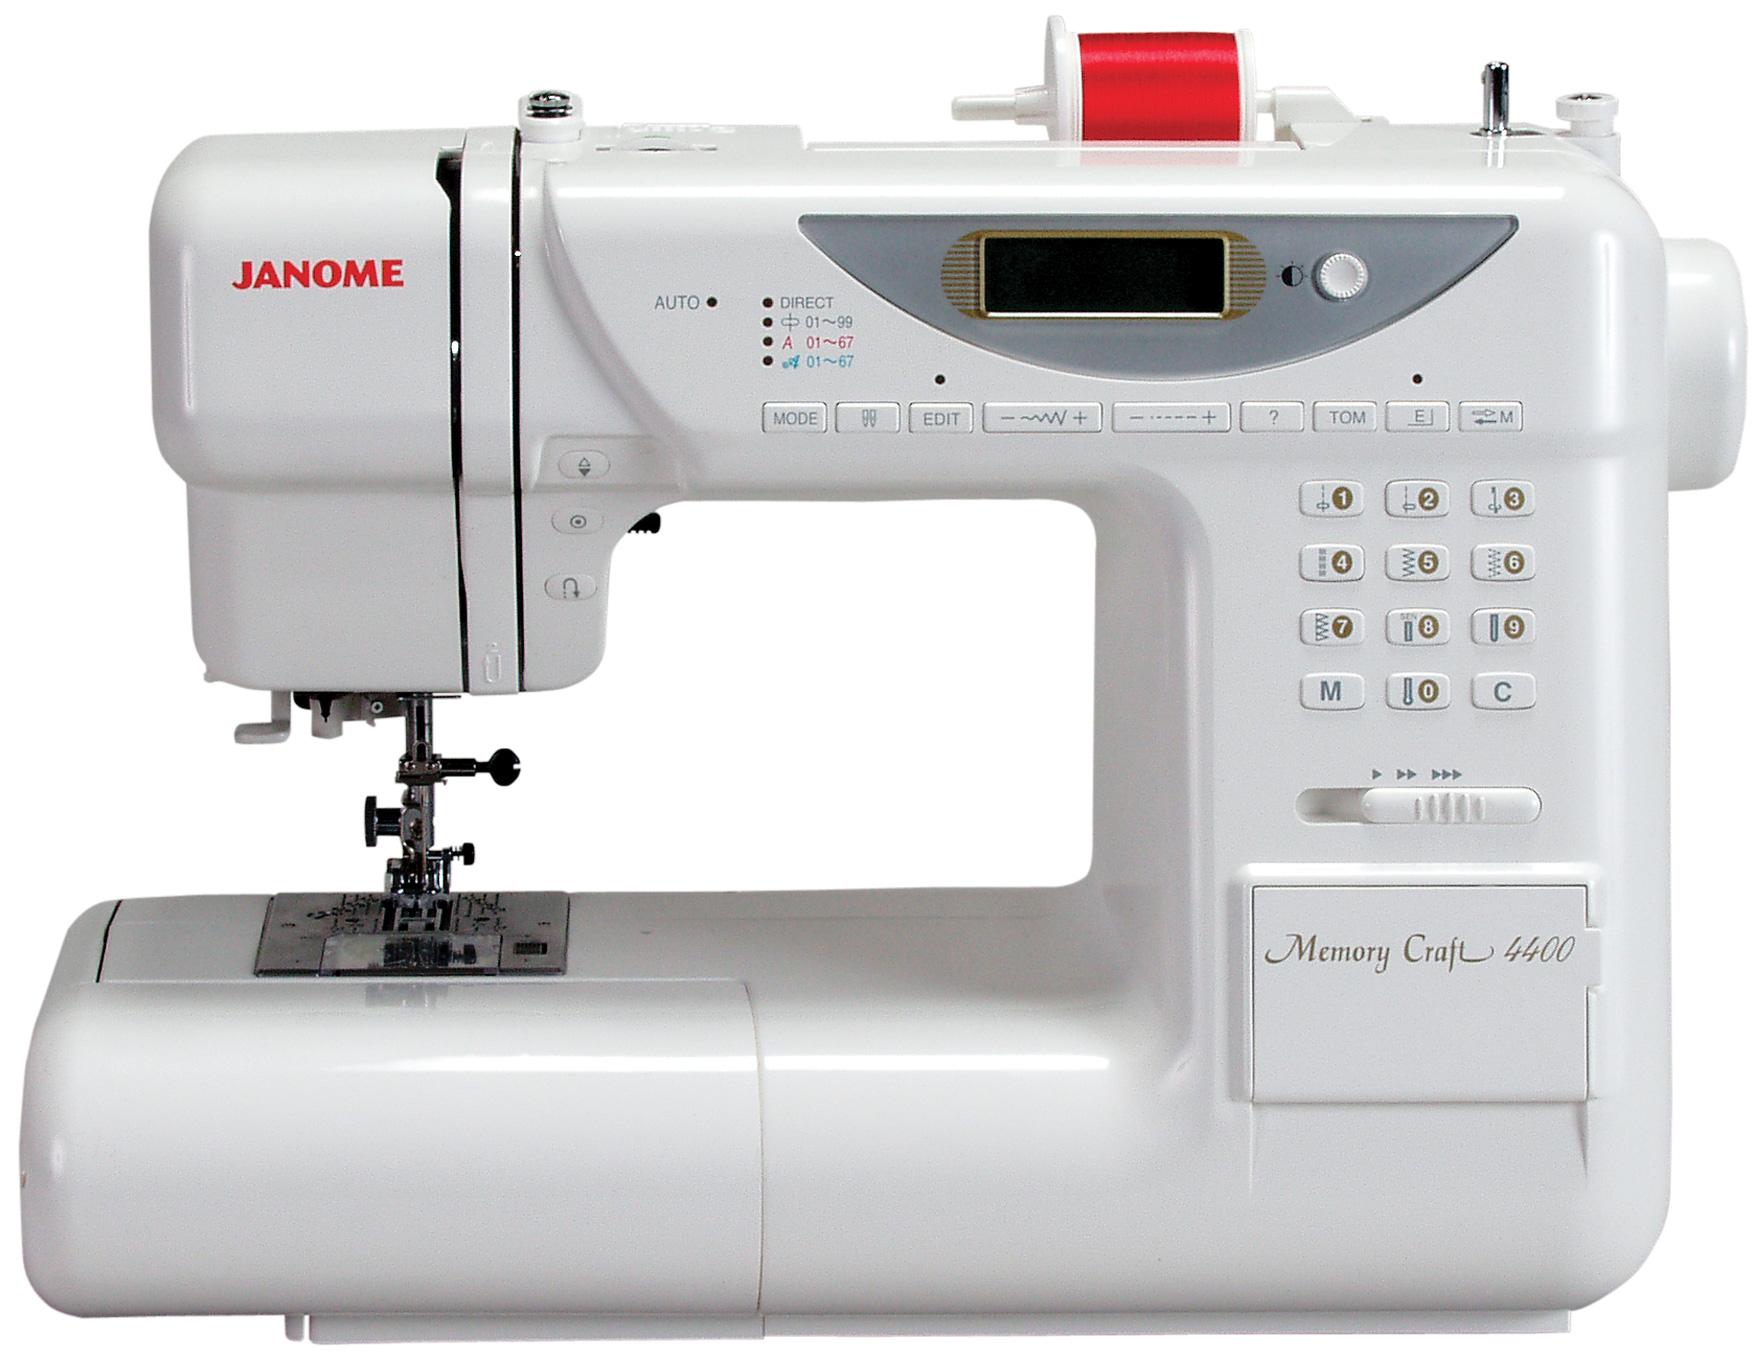 Janome Memory Craft MC 4400 Sewing & Quilting Machine